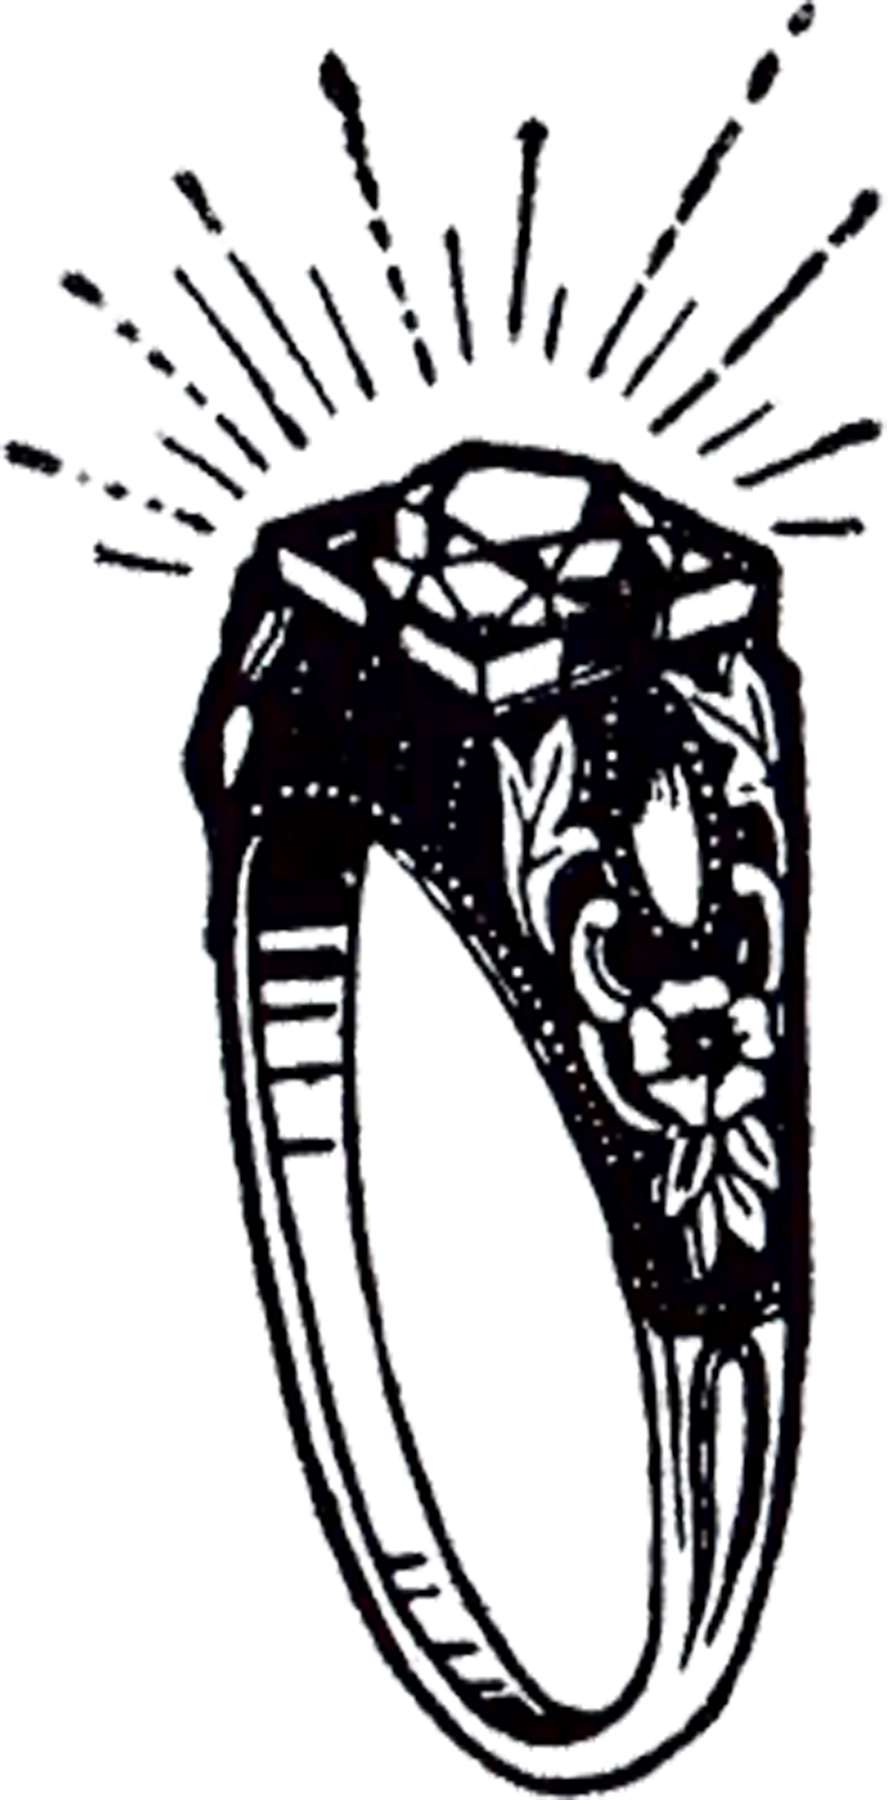 Vintage diamond ring clip art the graphics fairy